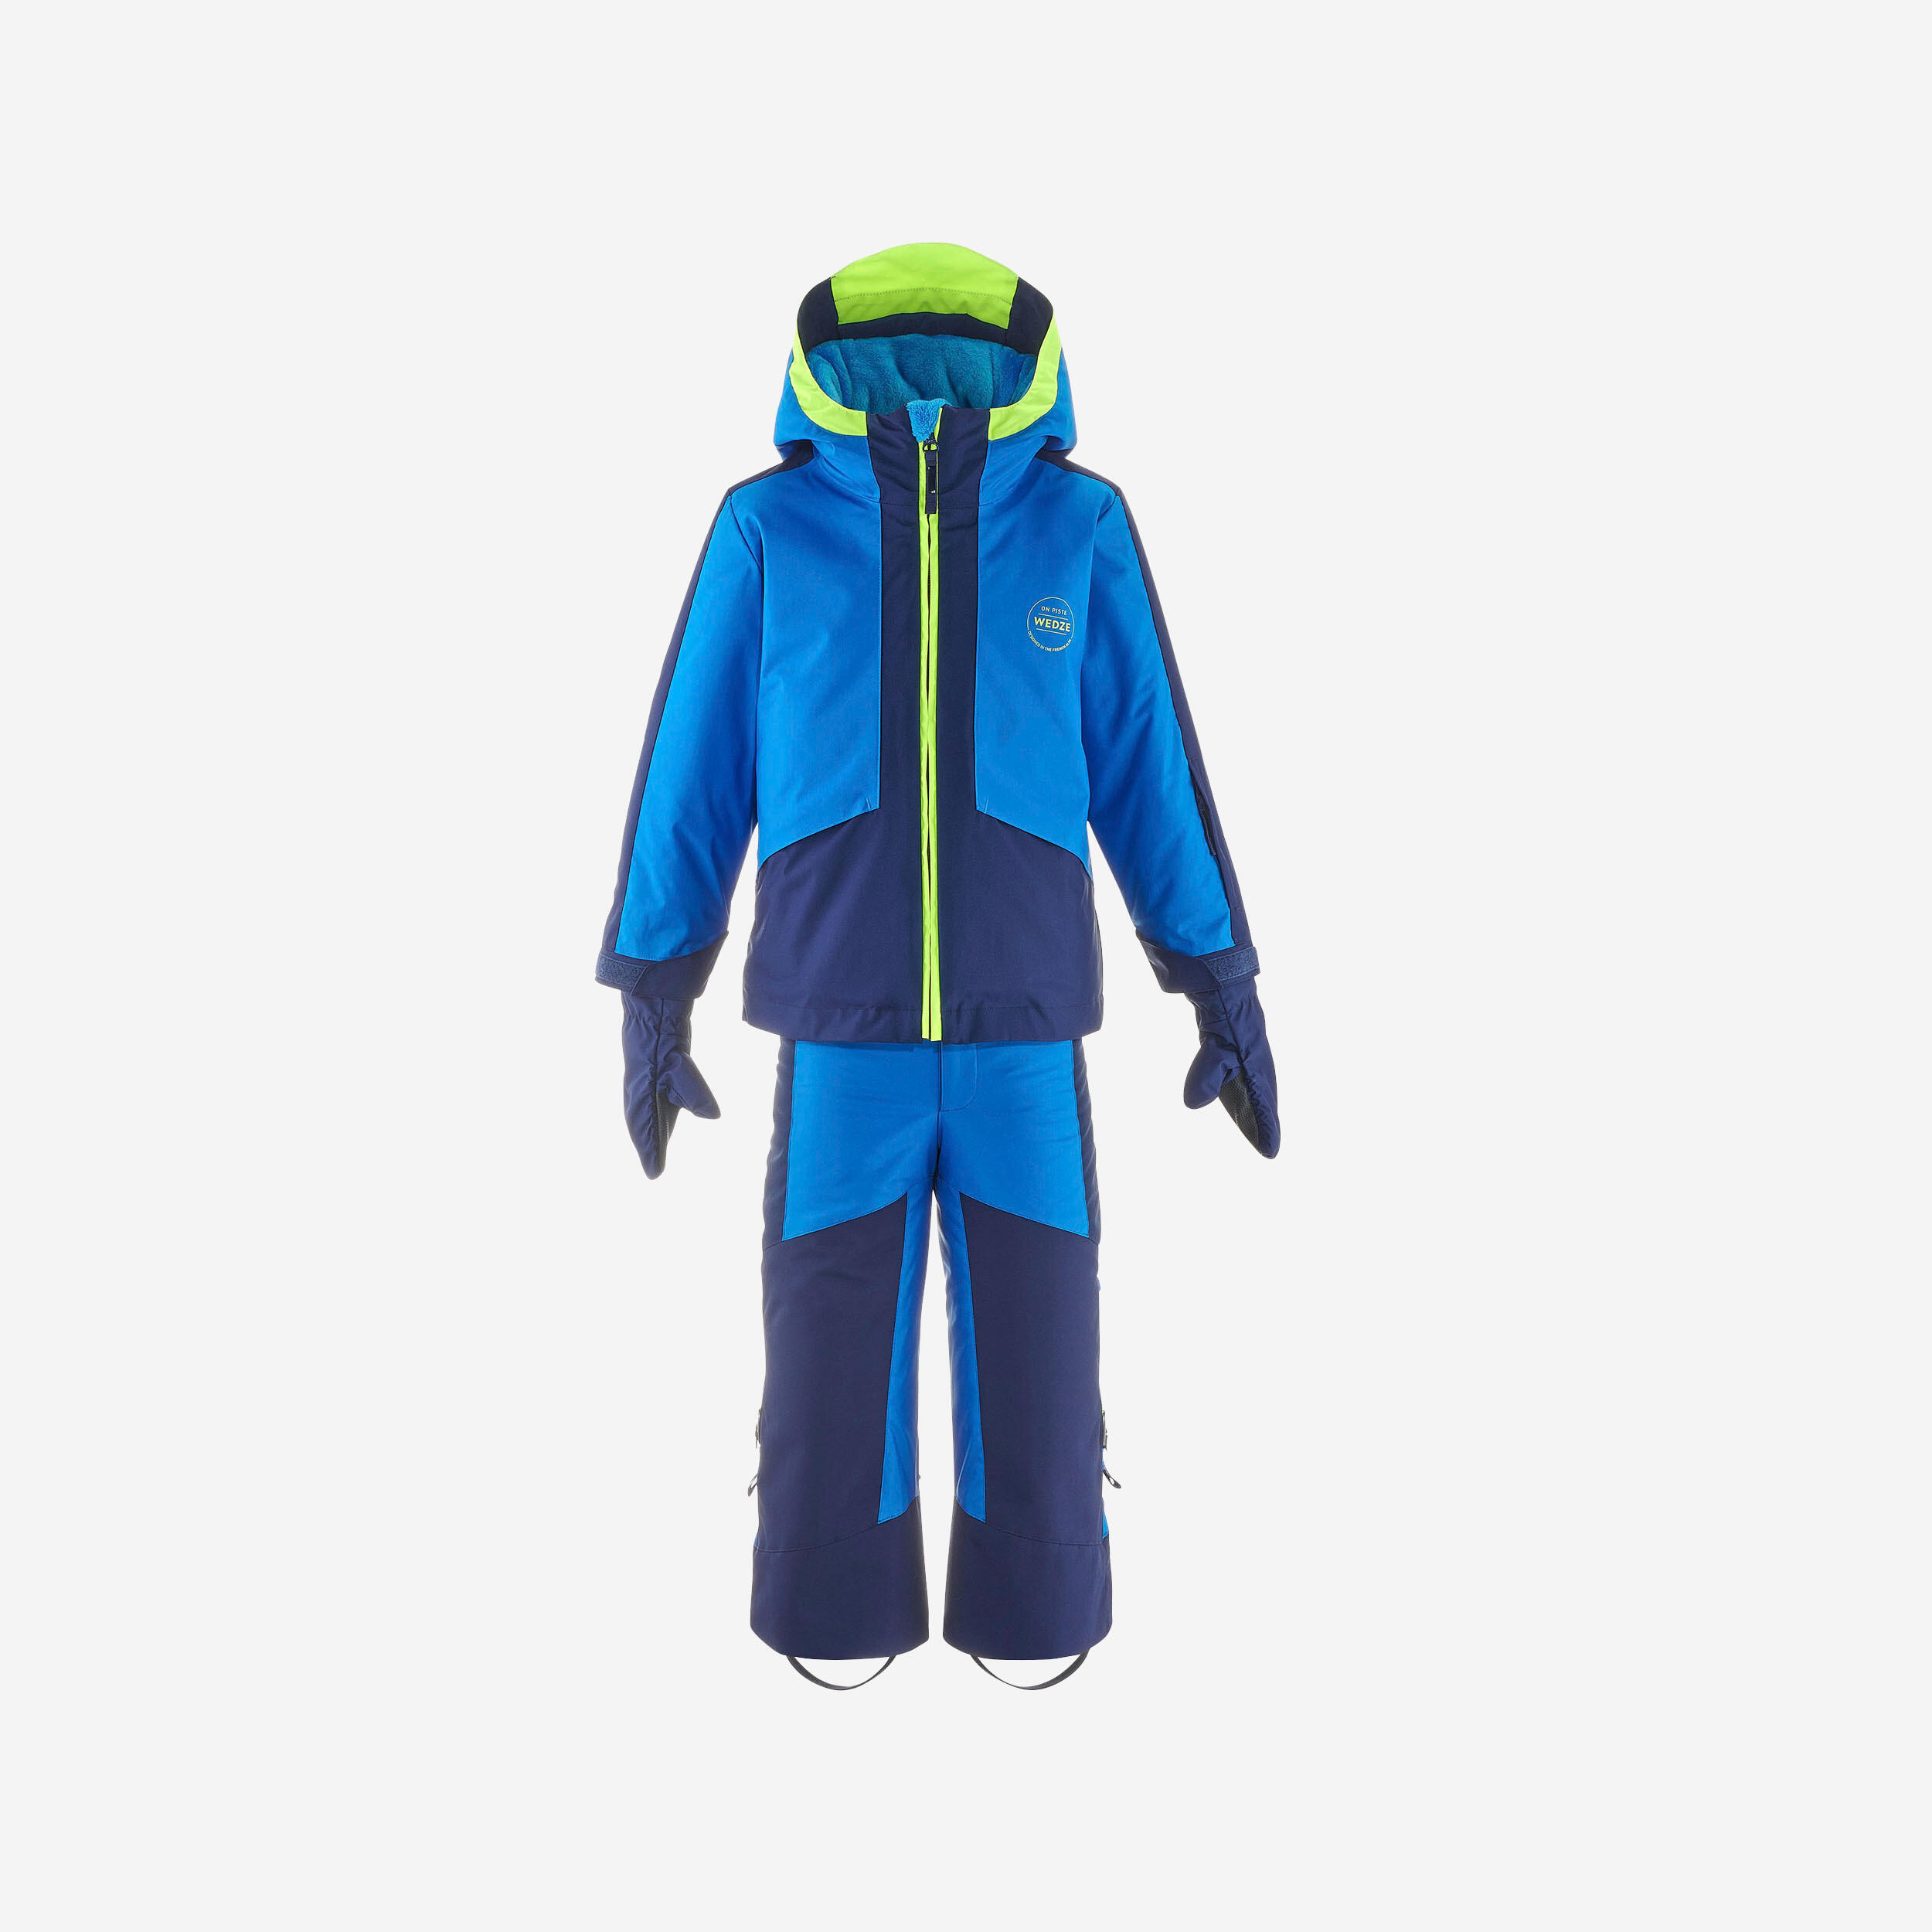 Kids’ Warm and Waterproof Ski Suit 580 - Blue 3/19